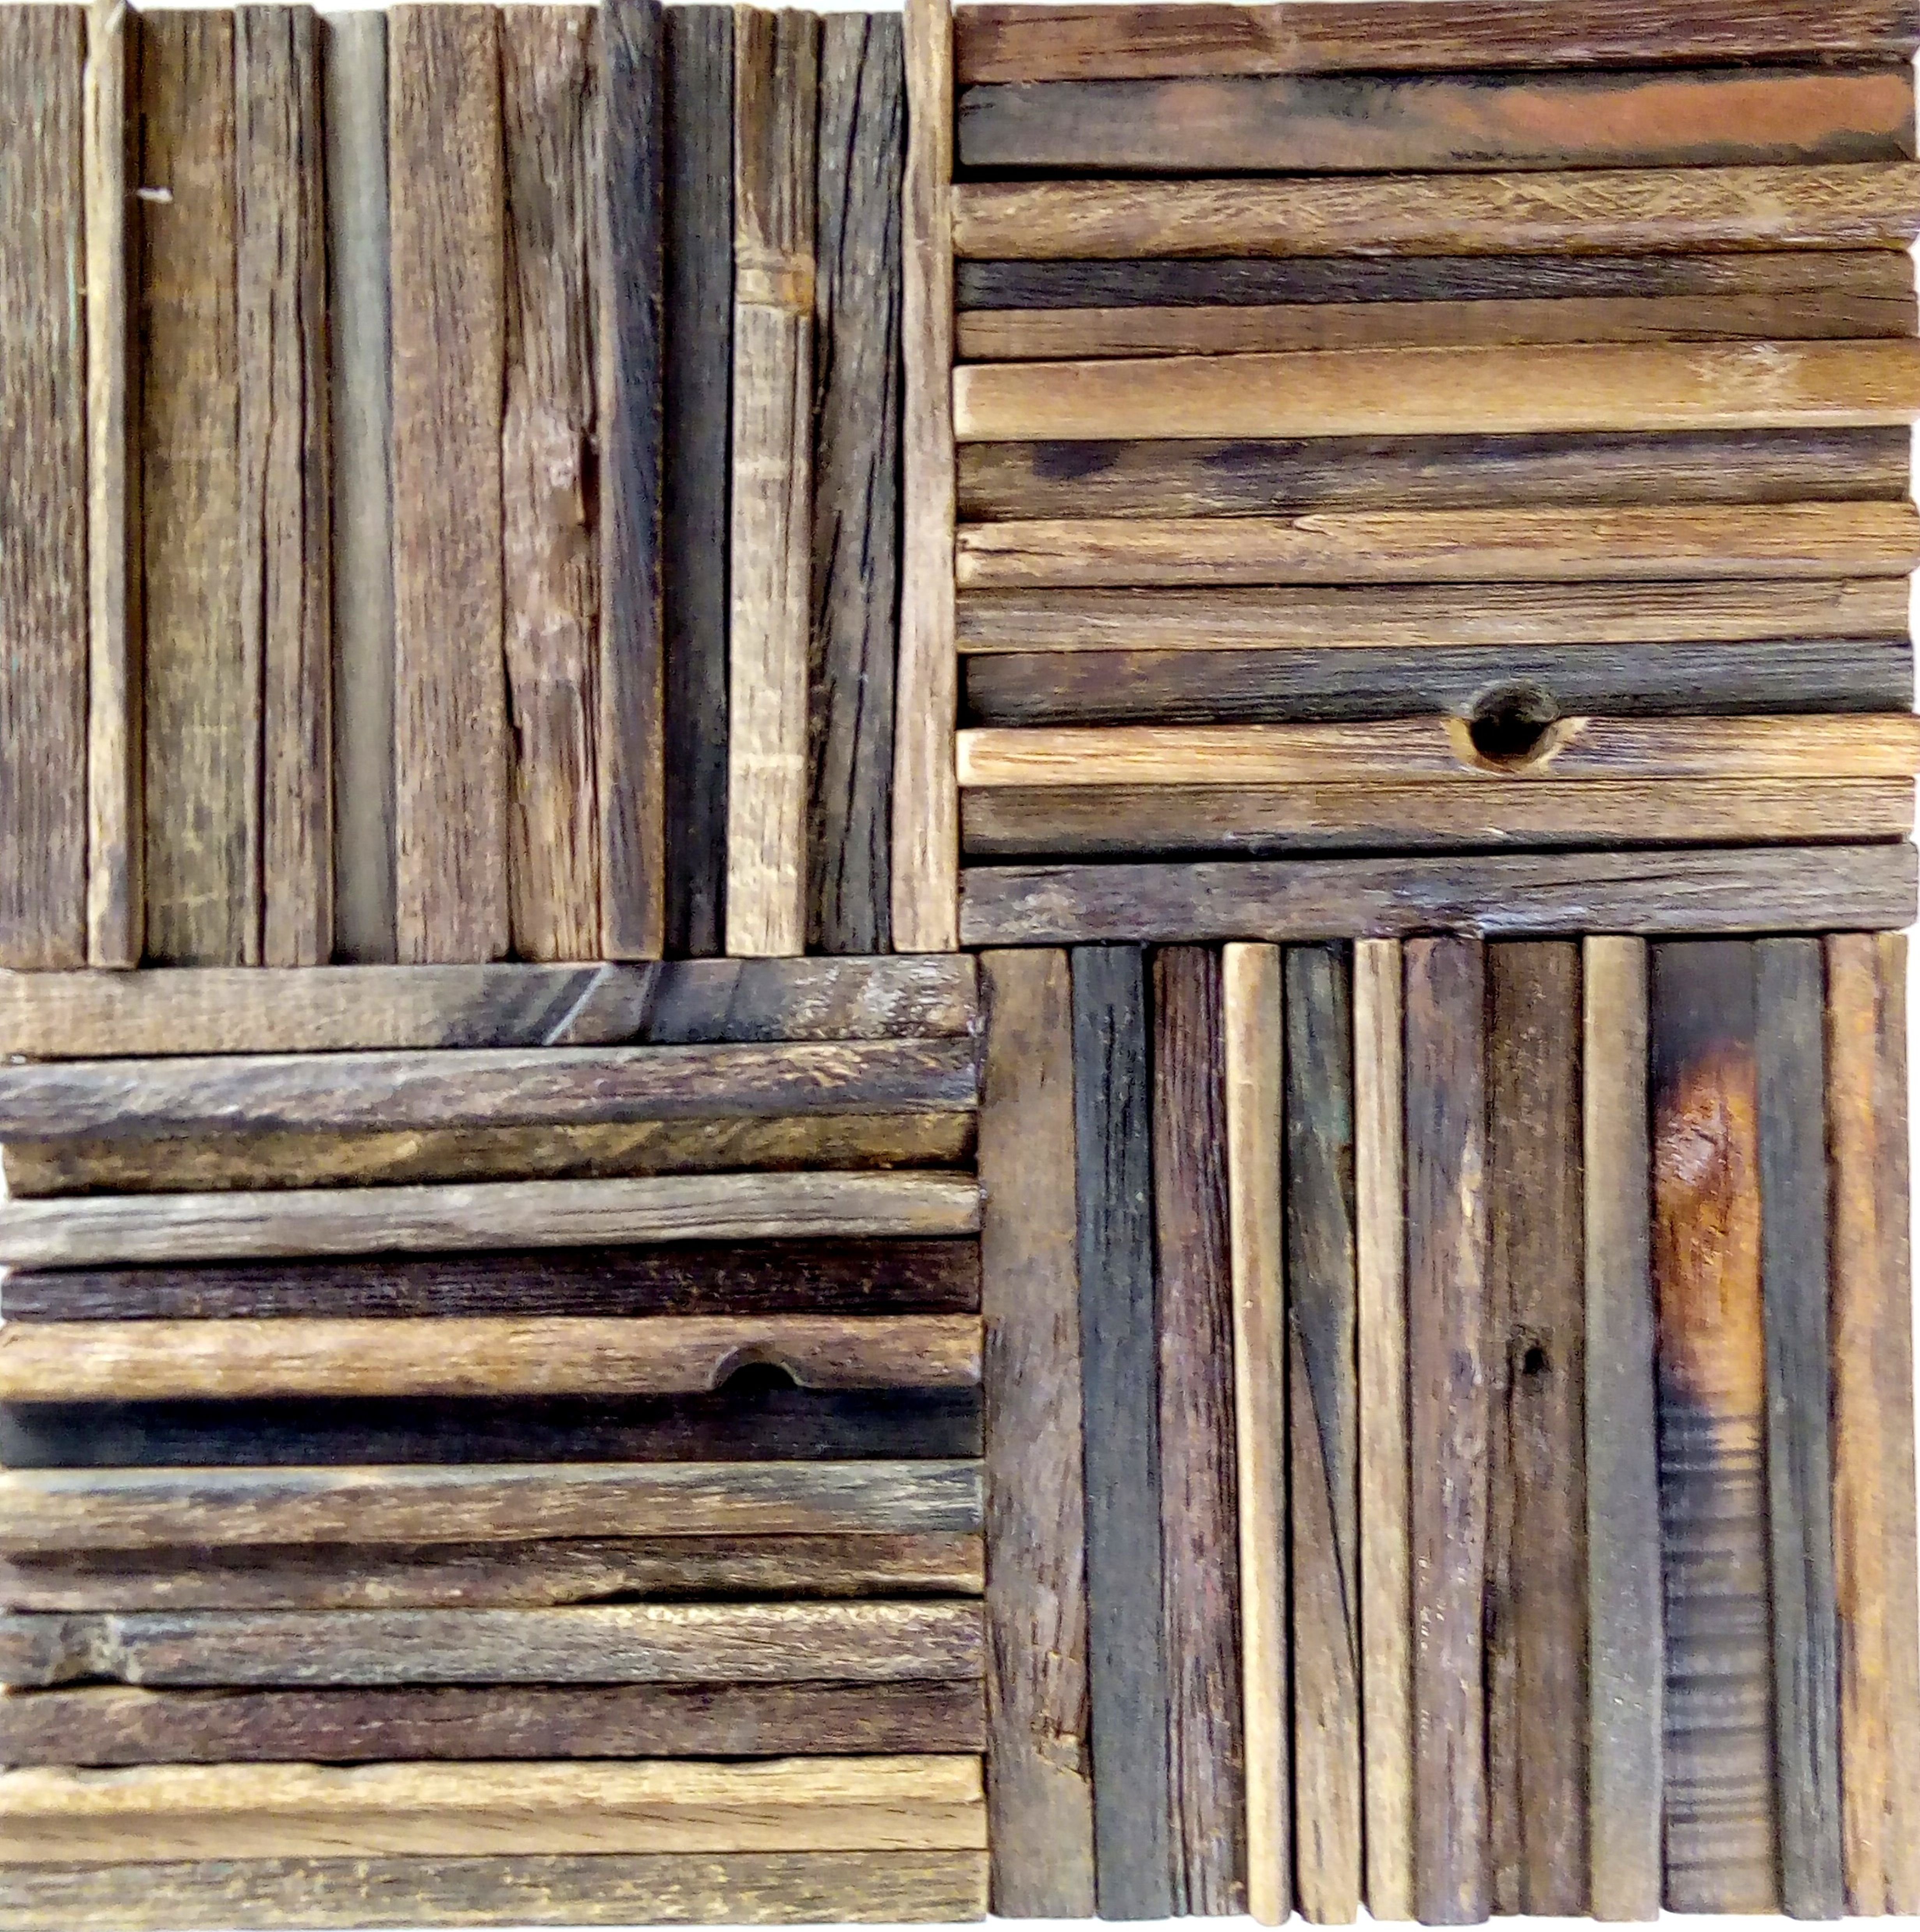 Mosani Mosaikfliesen Holzmosaik aus Bootsplanken Wood FSC Wandverkleidung